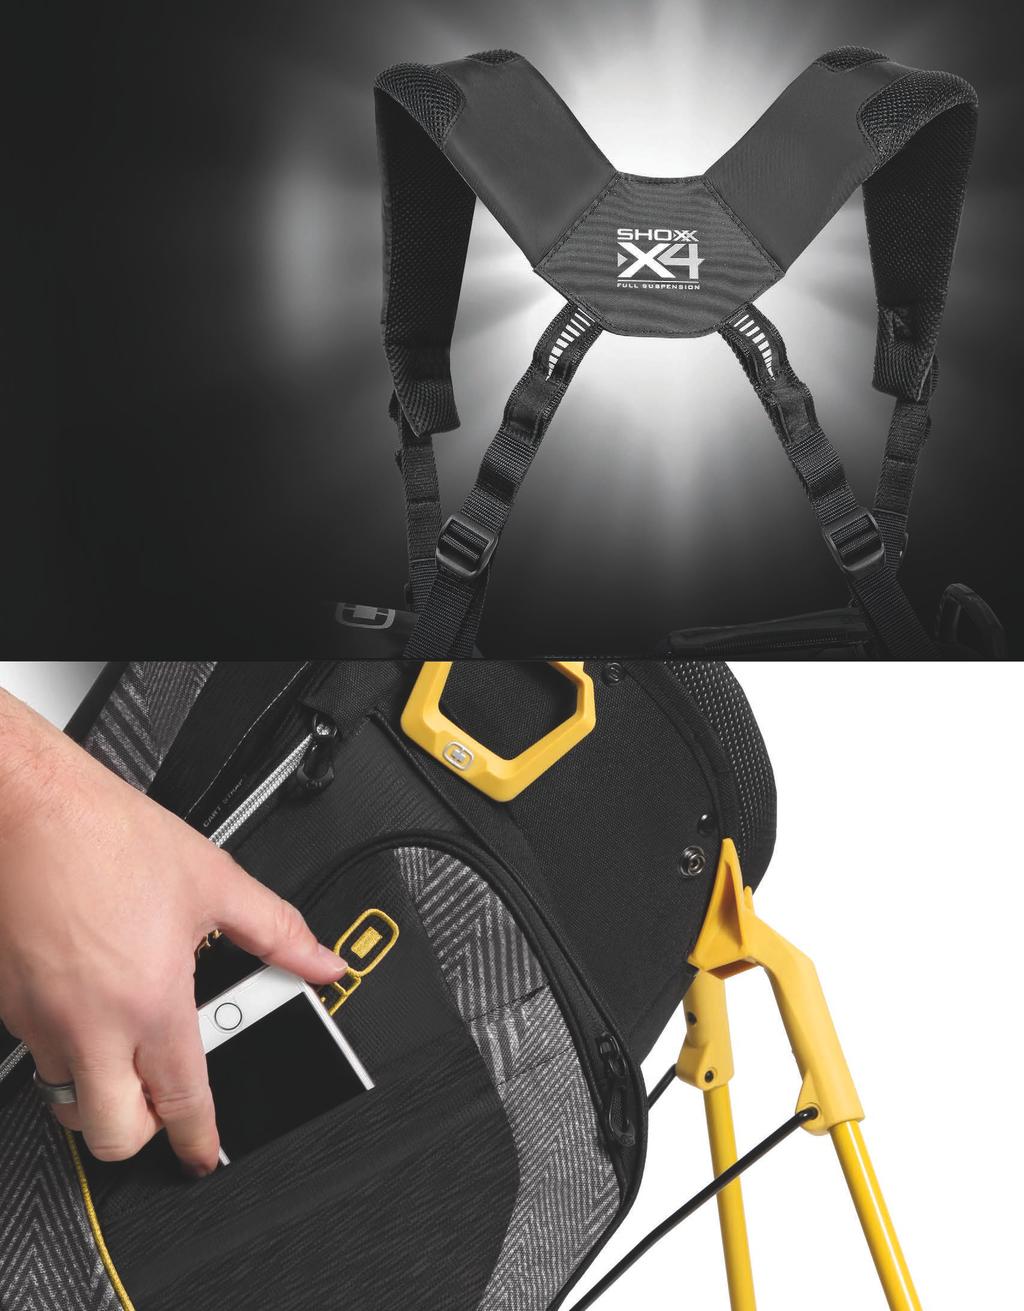 SHOXX X4 SUSPENSION STRAPS The SHOXX X4 Suspension with integrated, adjustable elastomeric straps